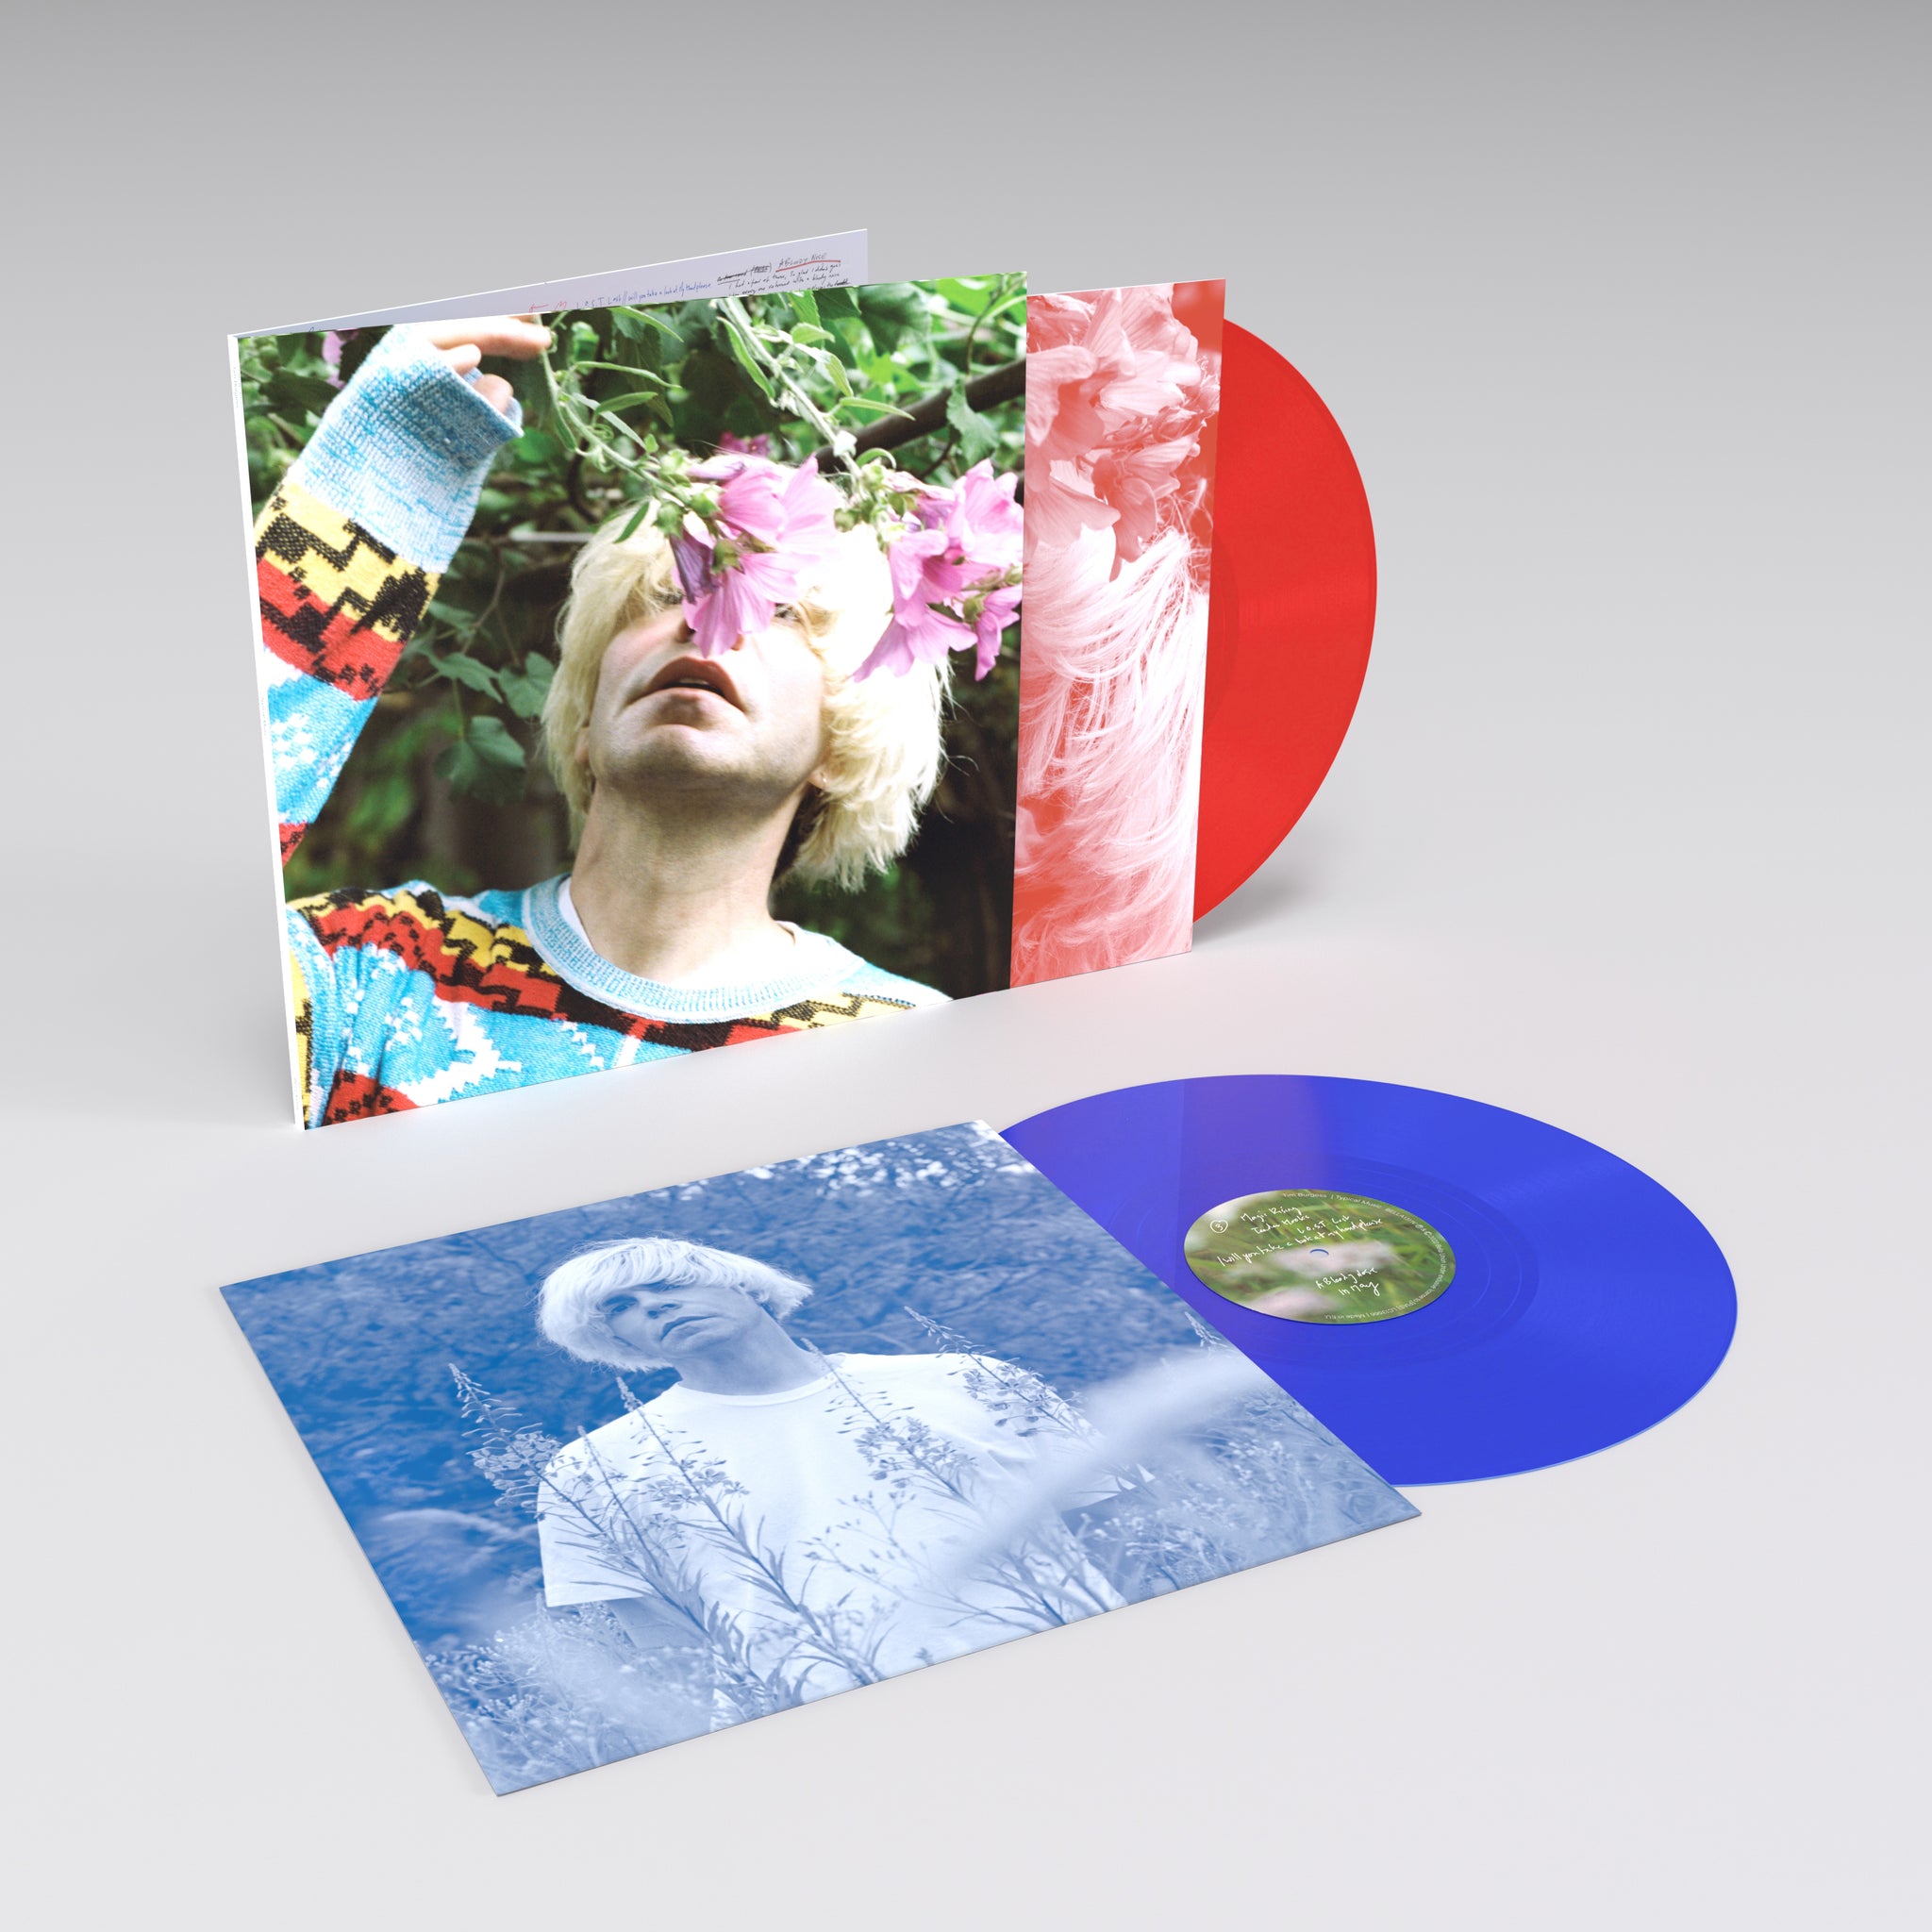 Tim Burgess - Typical Music (2LP Gatefold Sleeve Transparent Red & Blue Vinyl + OBI Strip)